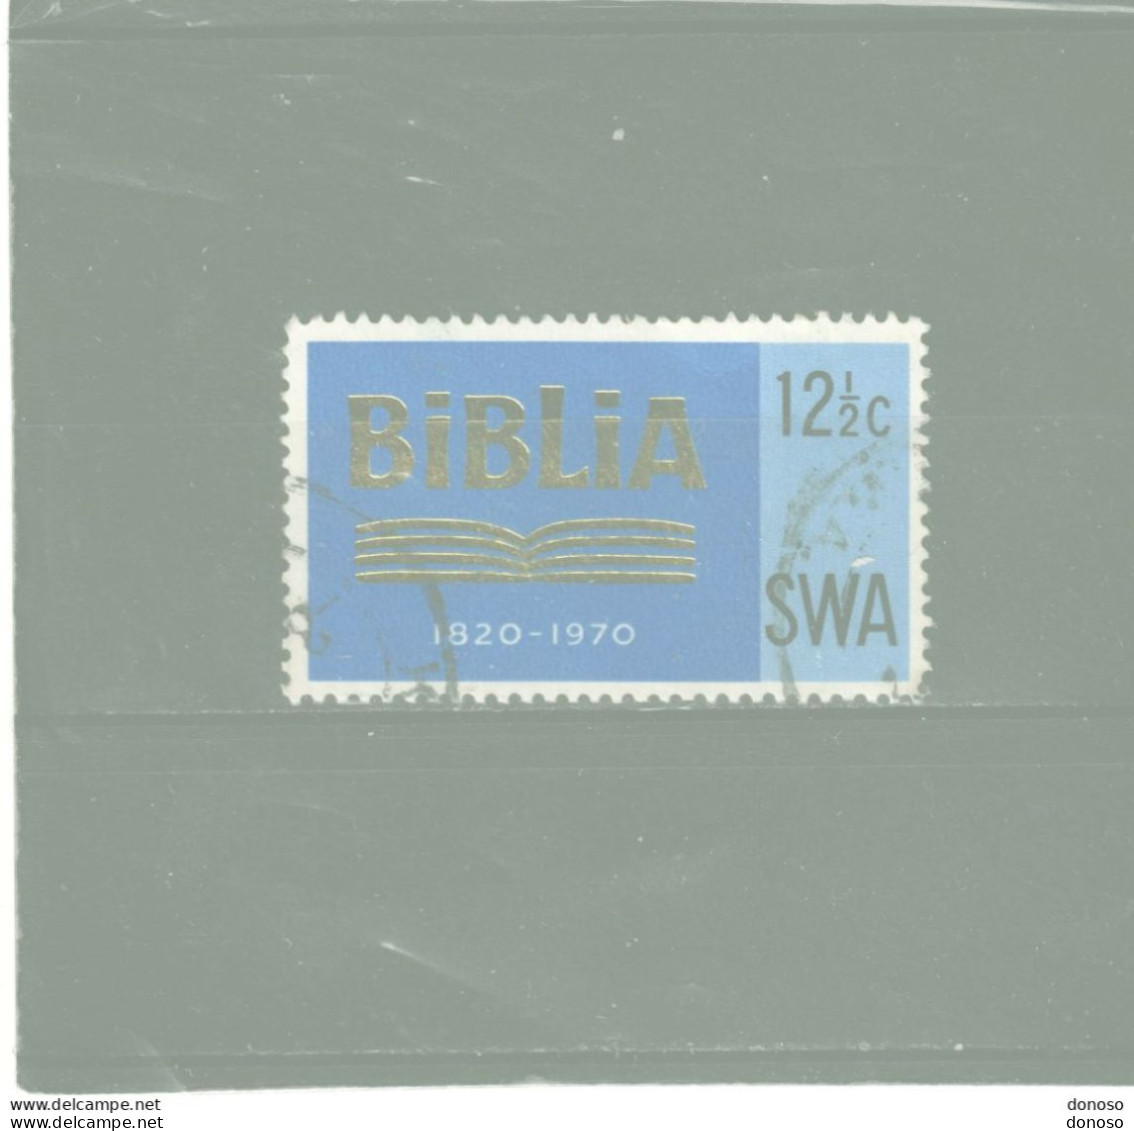 SWA SUD OUEST AFRICAIN 1970 SOCIETE BIBLIQUE Yvert 303, Michel 359  Oblitéré Cote Yv 33 Euros - Africa Del Sud-Ovest (1923-1990)